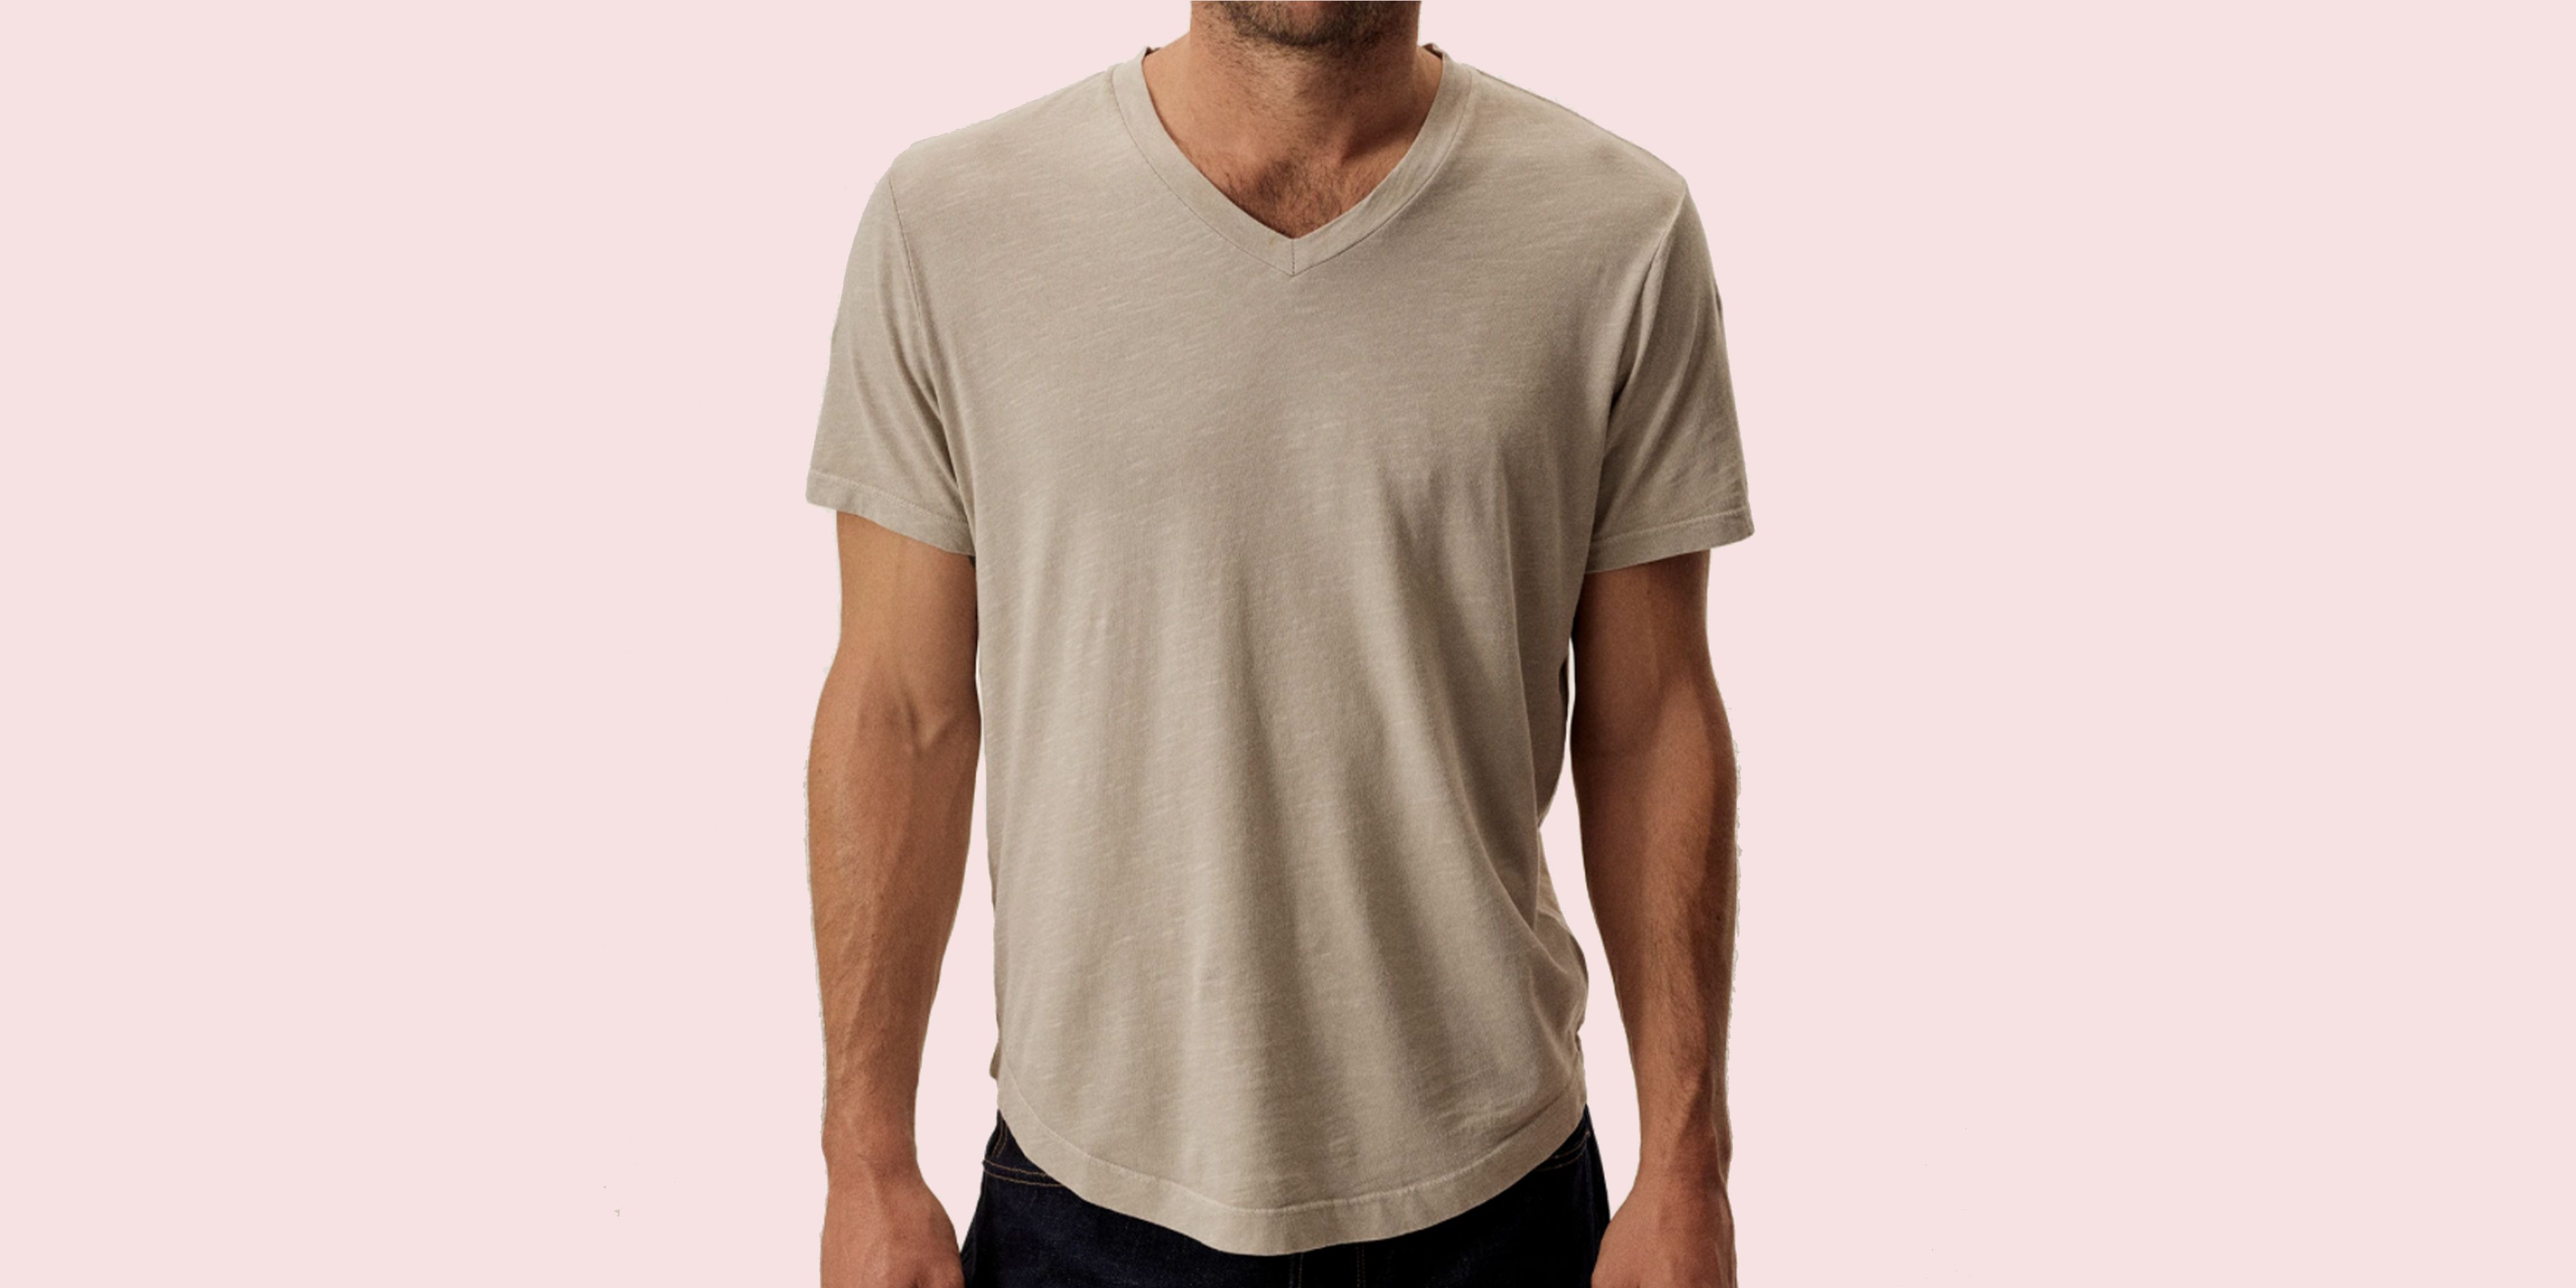 Men's V-Neck T-SHIRT Short Sleeve Tshirt TOPS Relaxed Loge Tee Classic shirt UK 